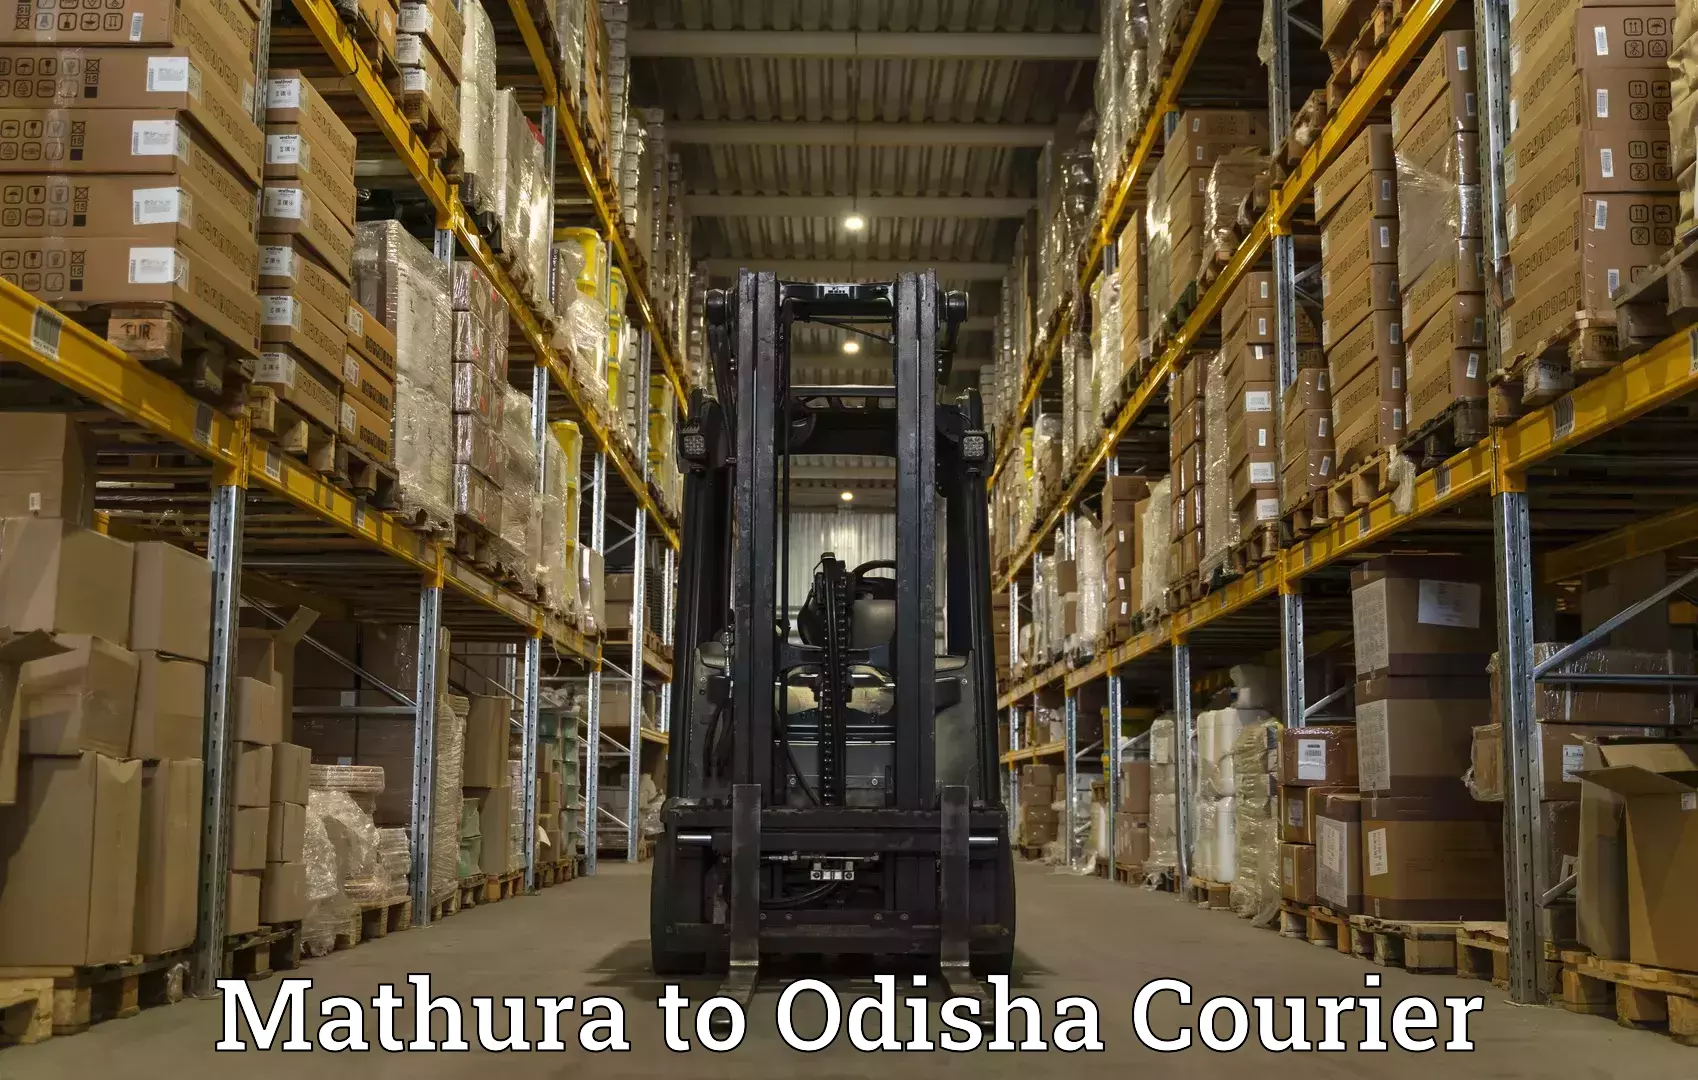 Courier service comparison Mathura to Chhendipada